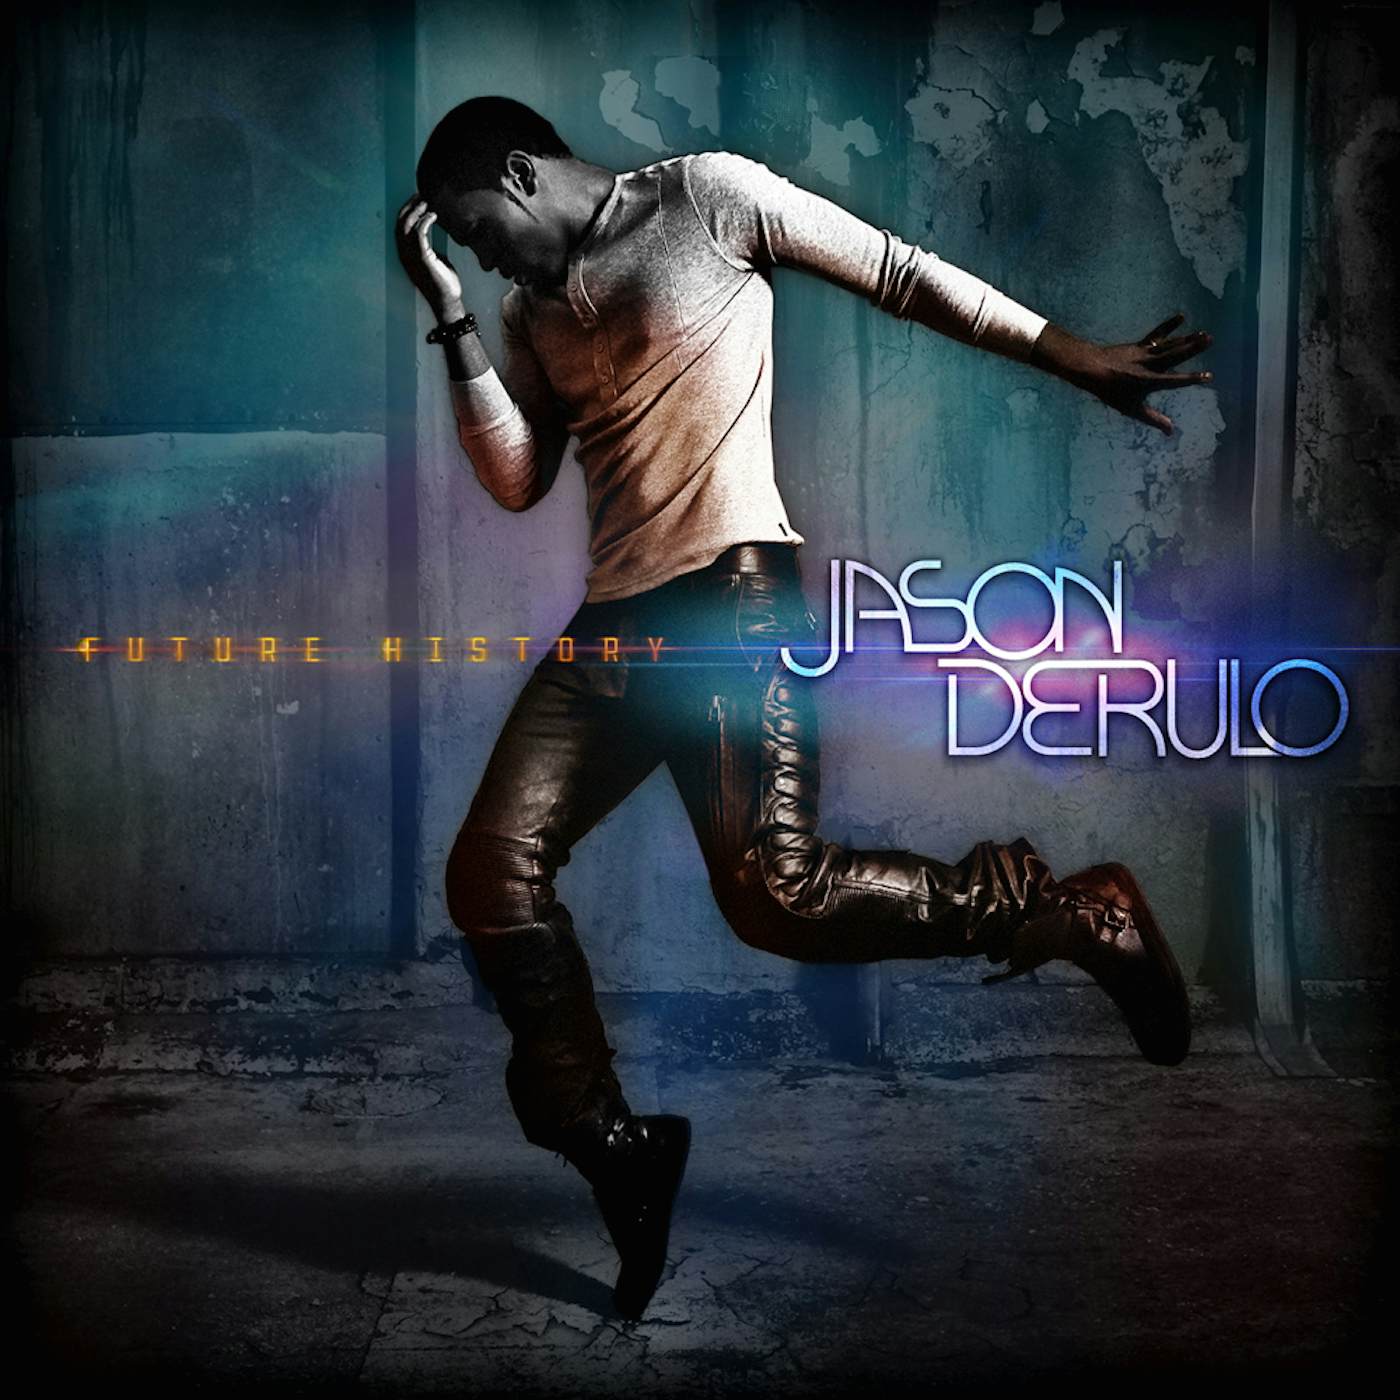 Jason Derulo FUTURE HISTORY CD